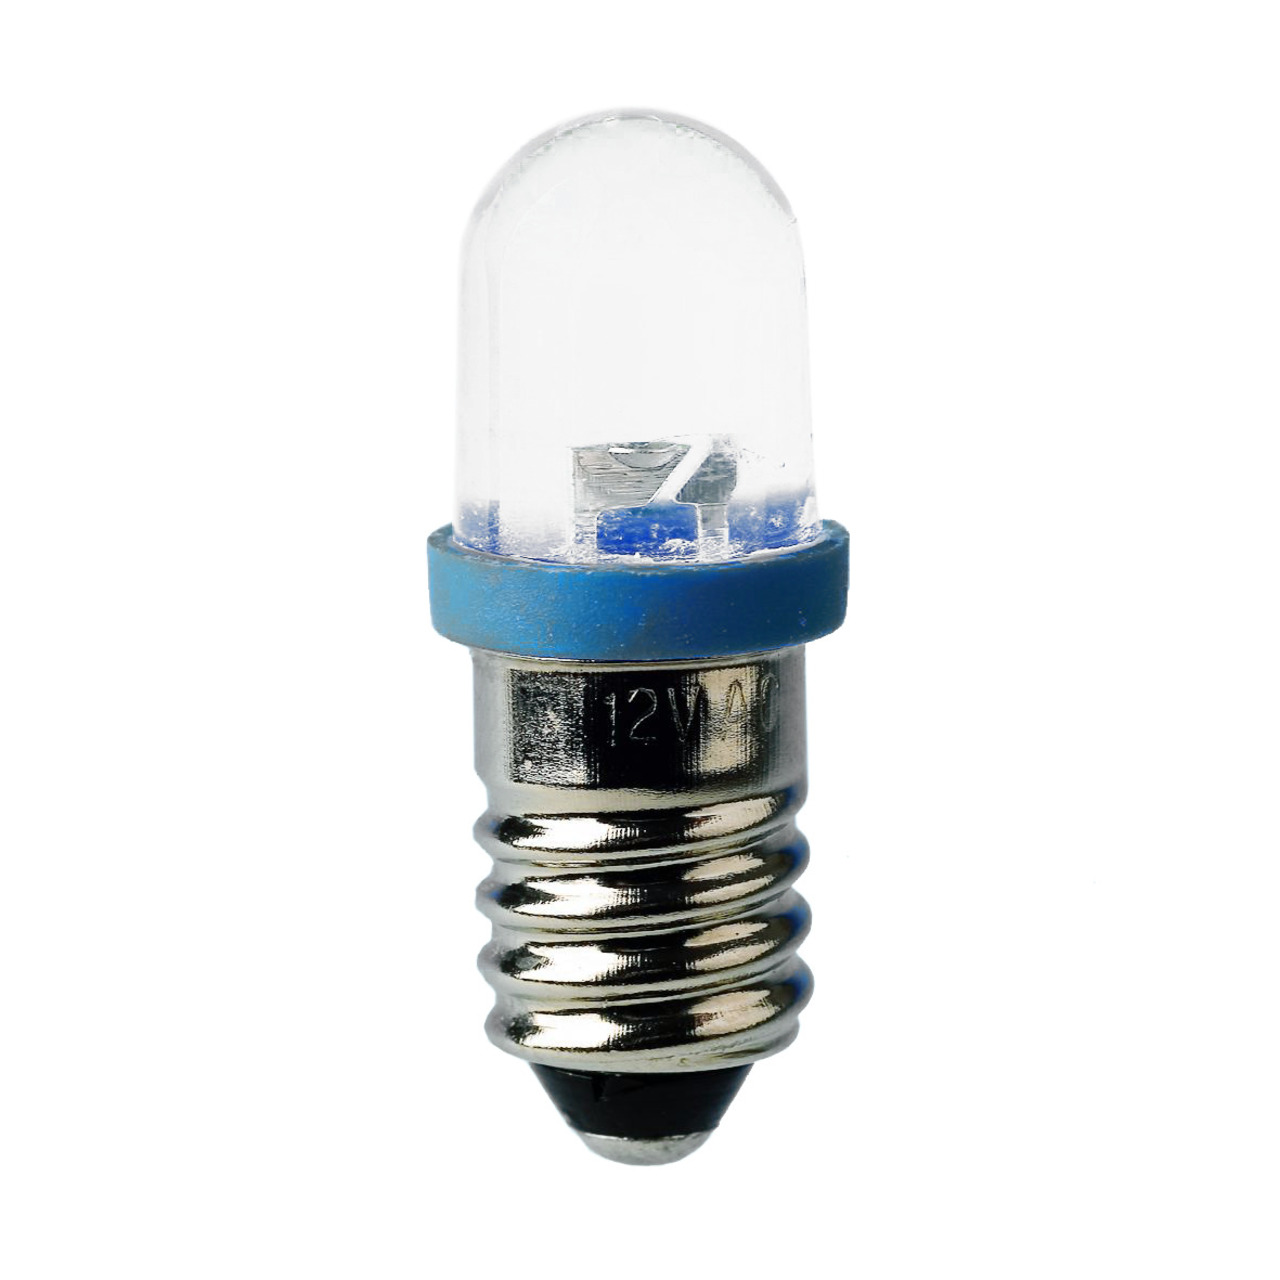 Barthelme LED-Lampe E10 mit Brückengleichrichter- 10 x 28 mm- 230 V- rot unter Komponenten